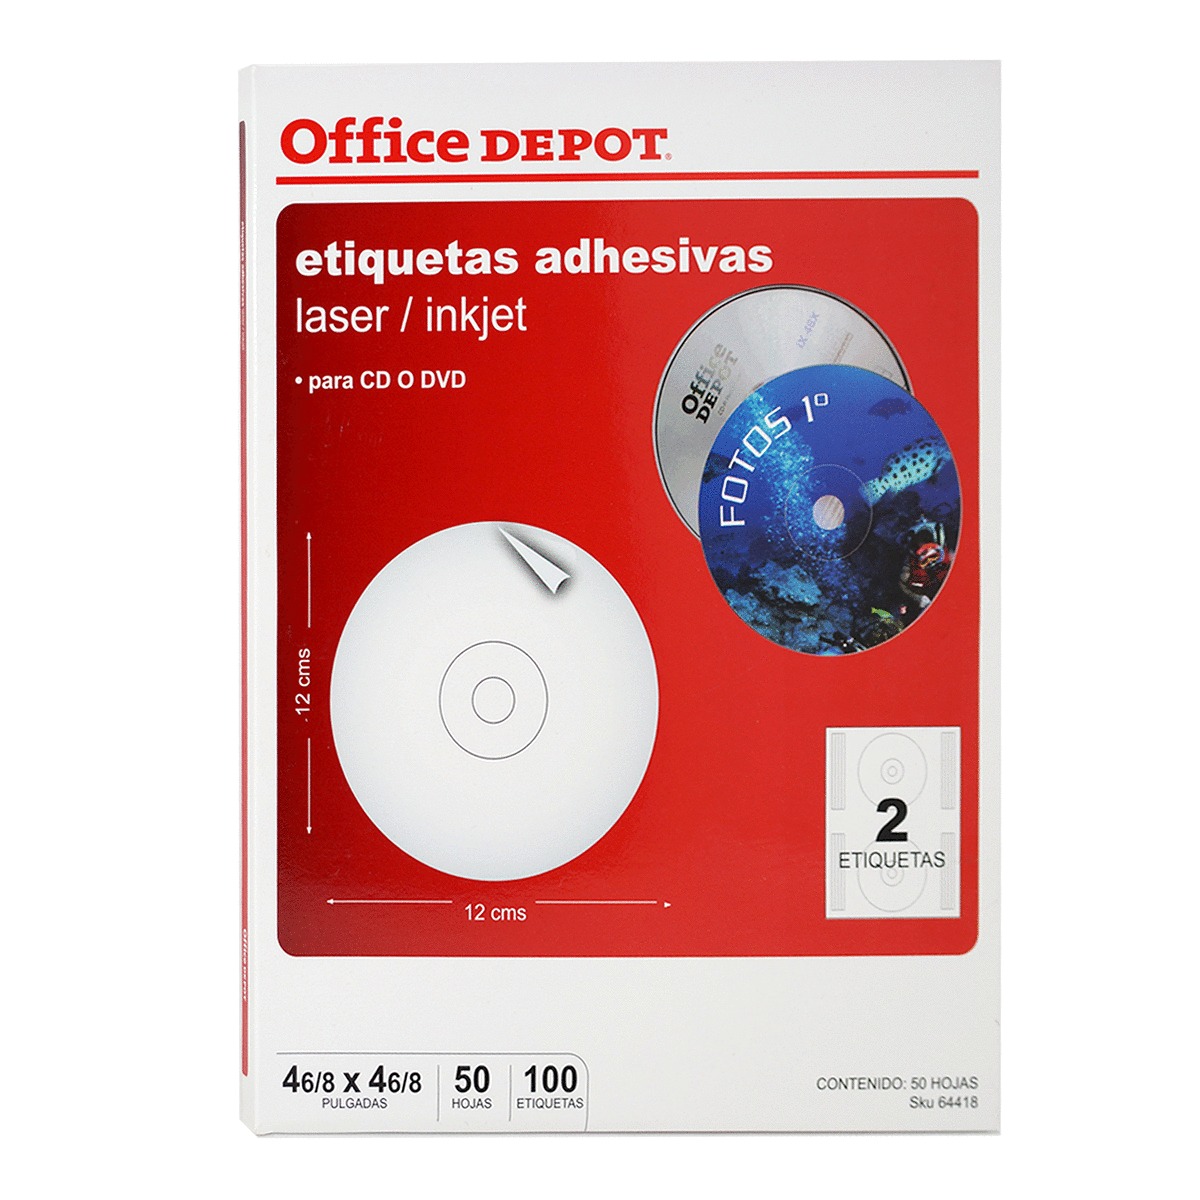 ETIQUETA OFFICE DEPOT ADHESIVA CD DVD,INKJET-LASER | Office Depot Guatemala